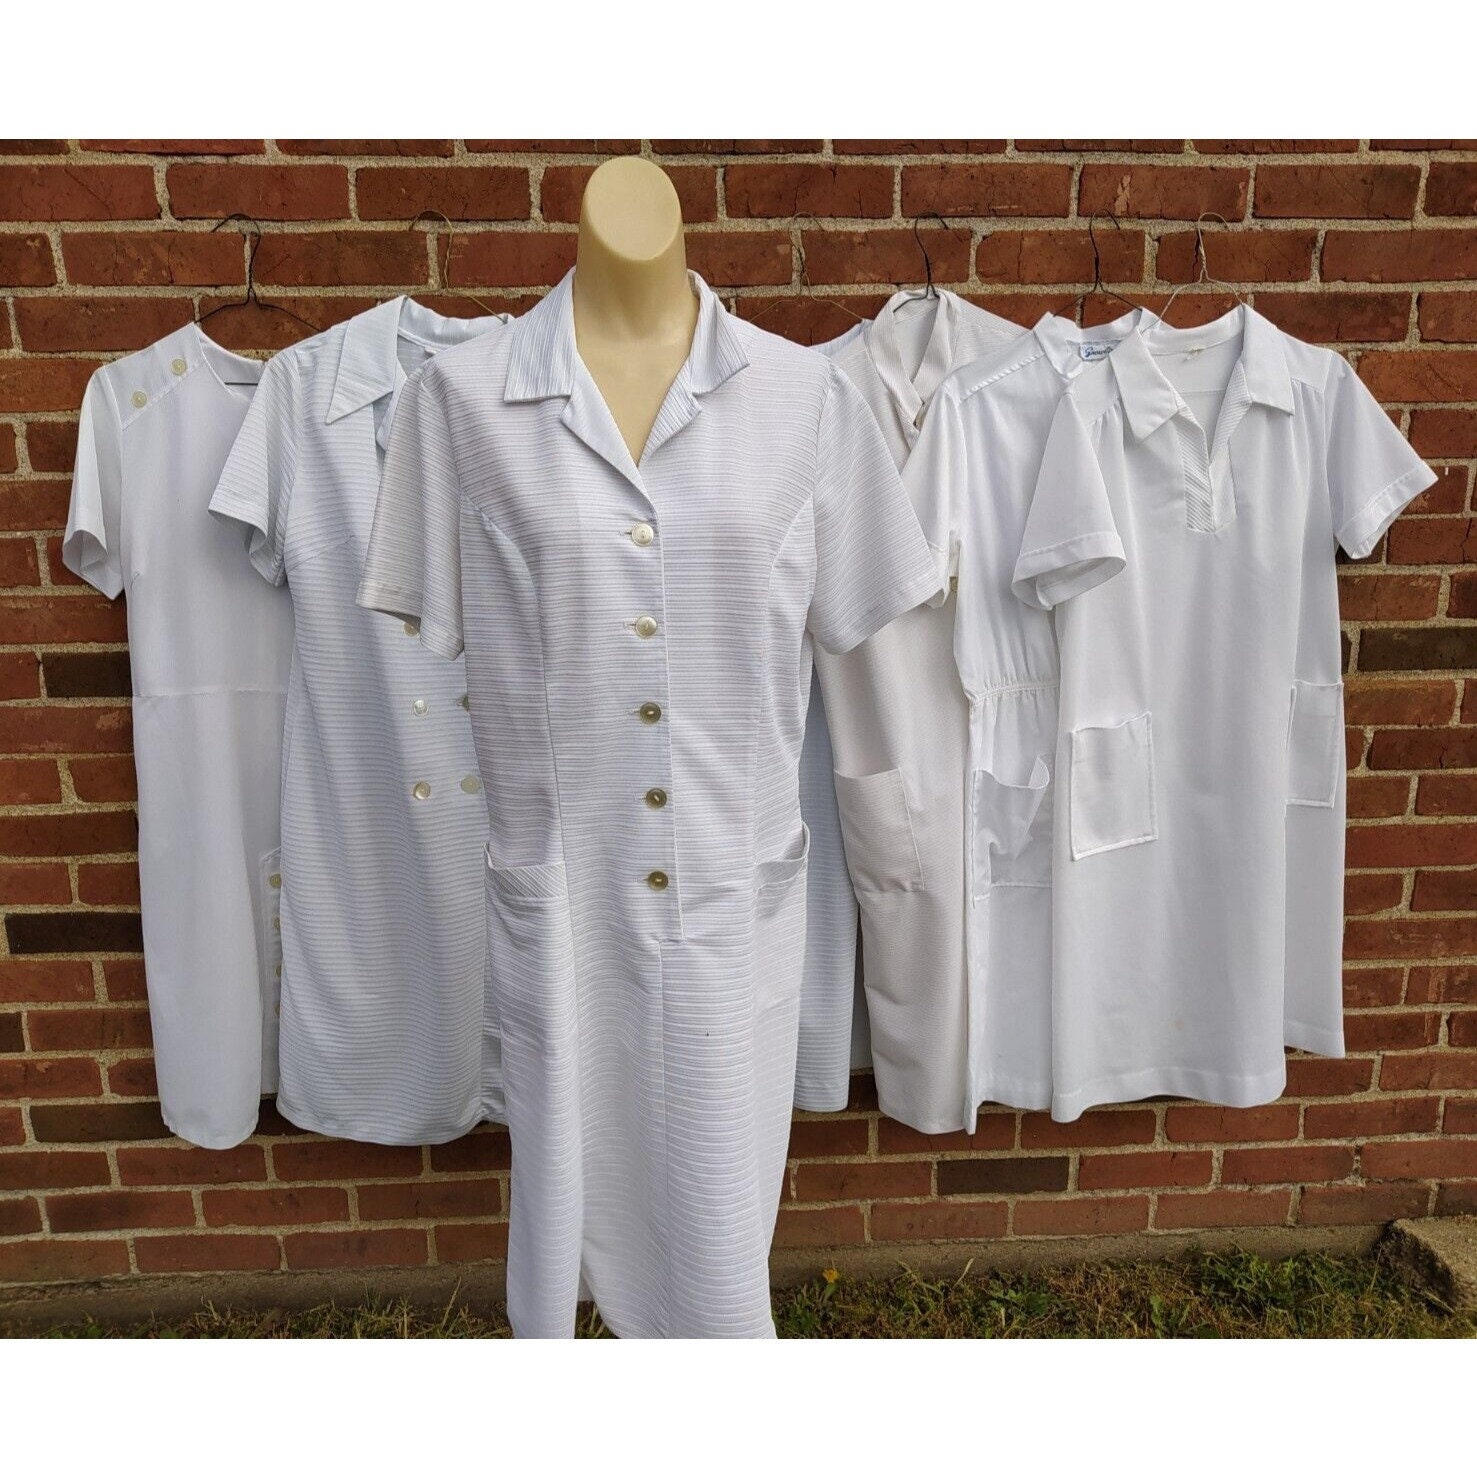 UNIFORM CRAFT Female Nurse Uniform  Hospital Staff, clinics, Home Health,  Nanny Uniforms for Women made of Polyester-Cotton (M, Violet and Grey) :  : Fashion